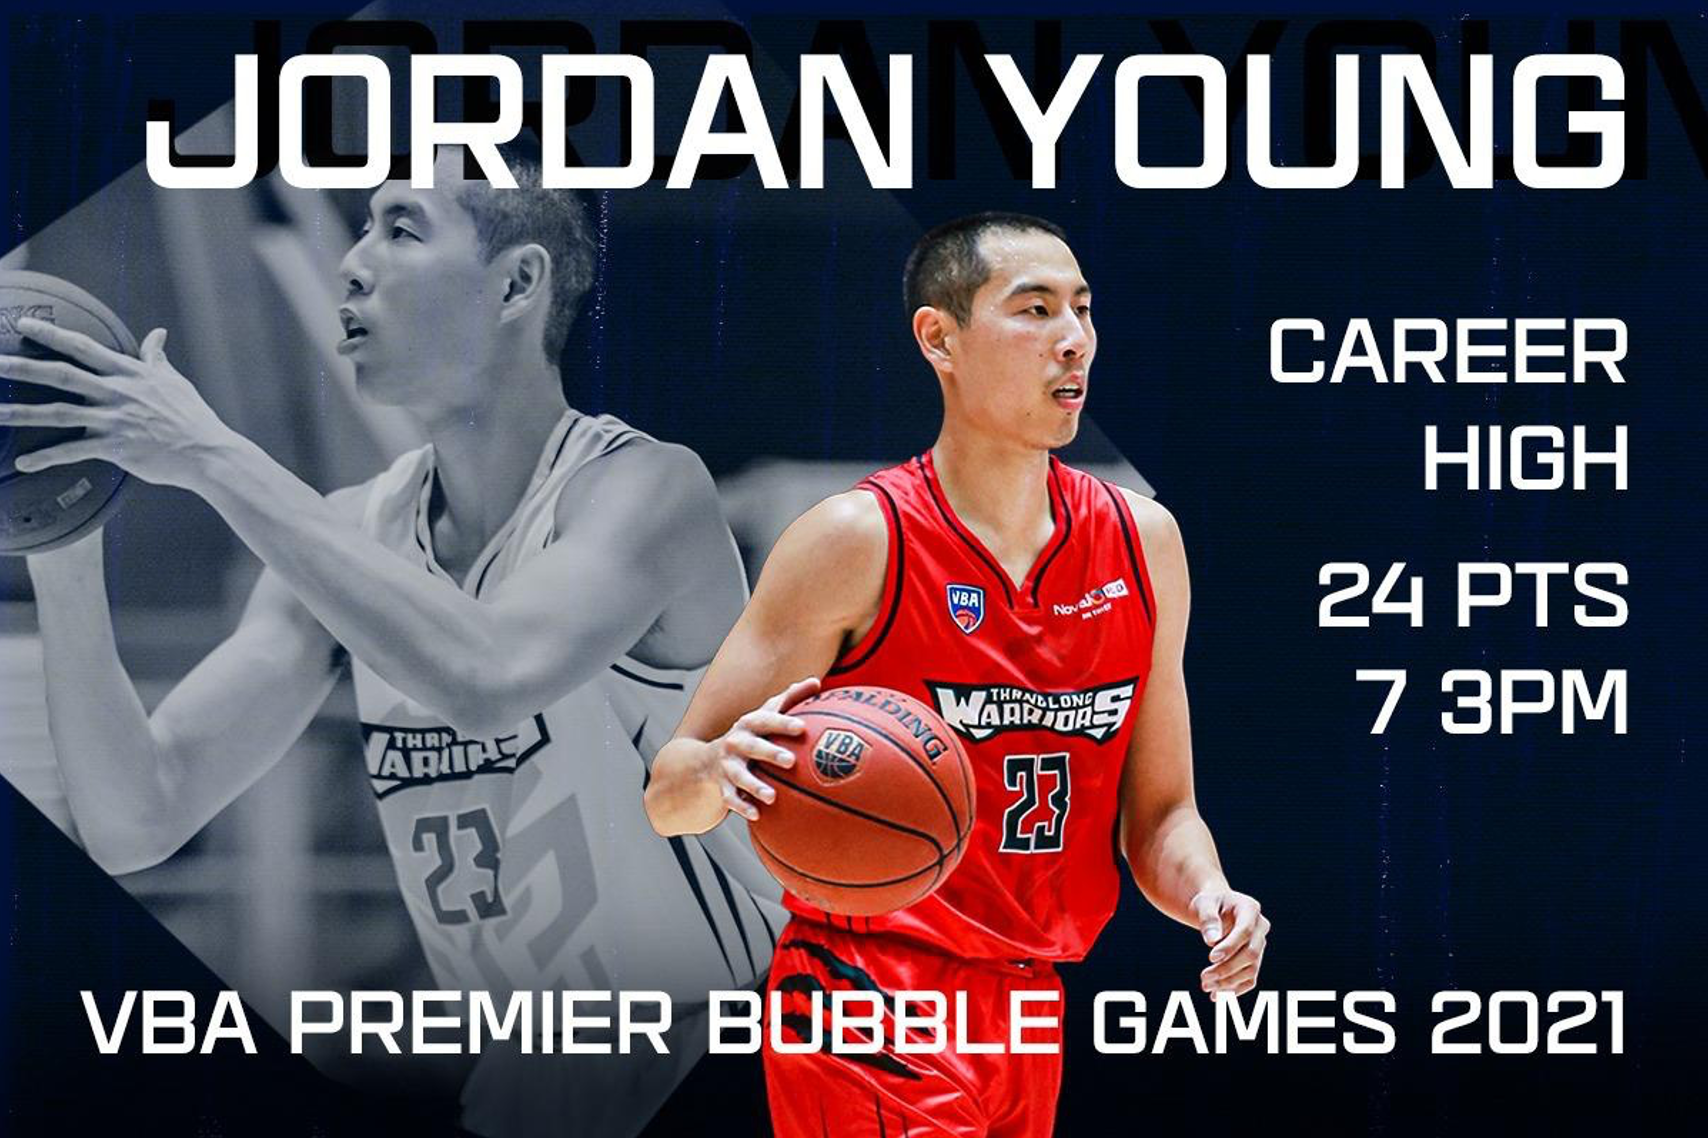 Jordan Young secures spot as Thang Long Warriors’ top scorer at VBA Premier Bubble Games